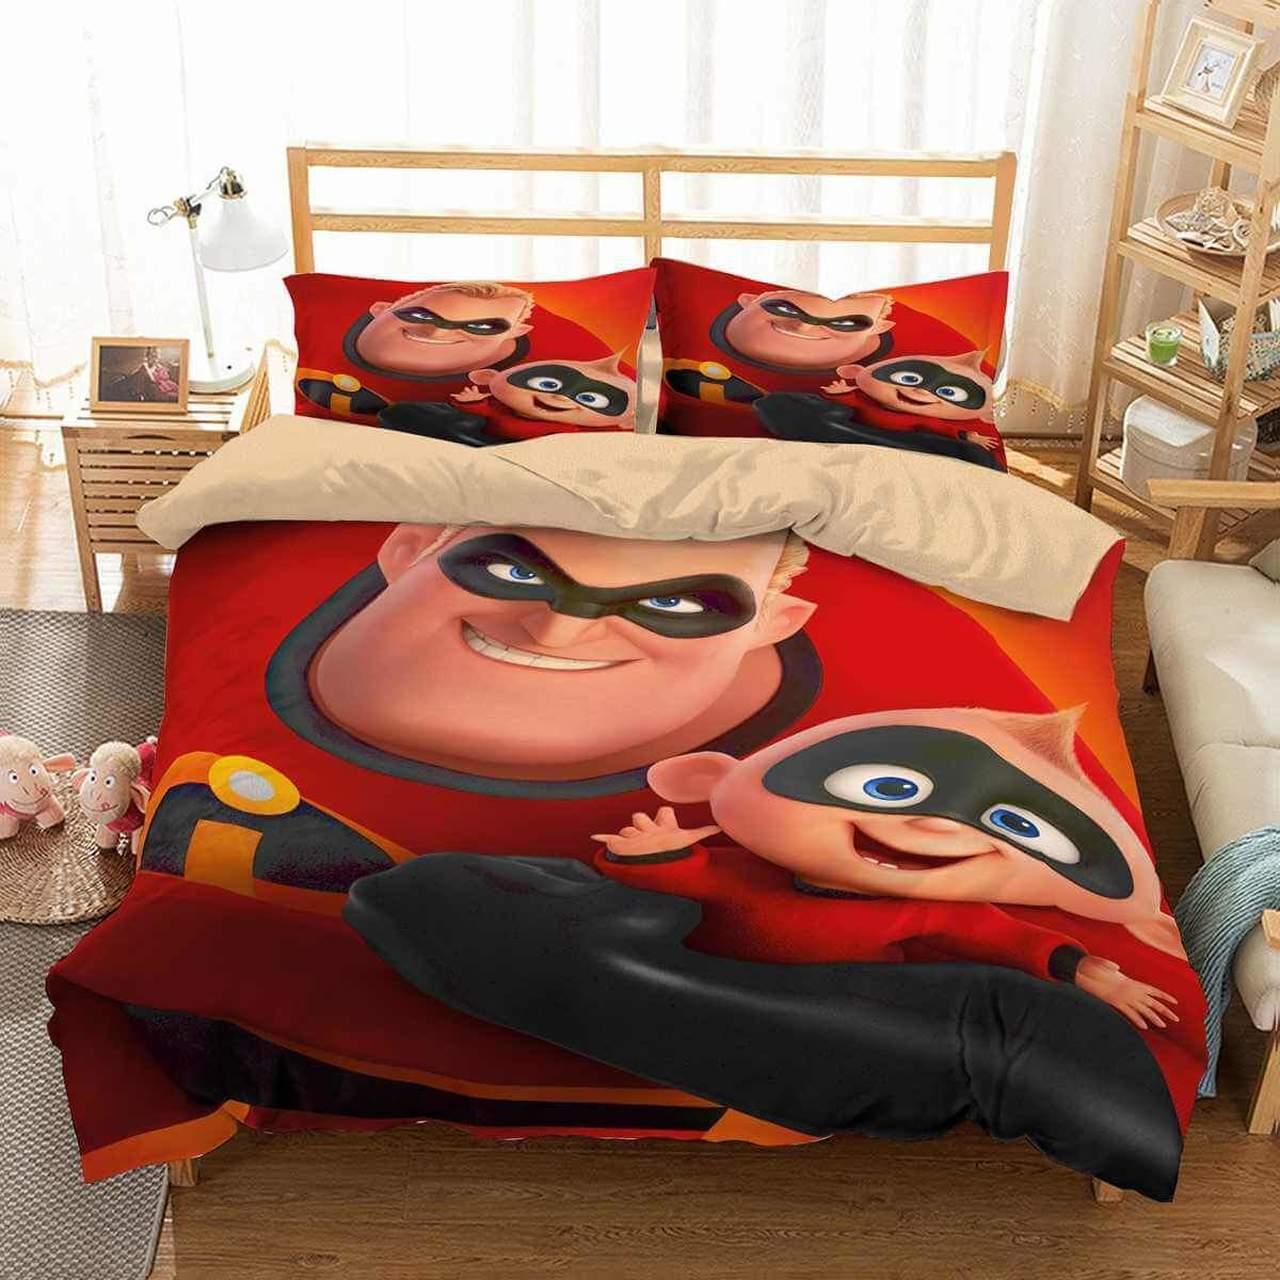 Incredibles Bedding Set